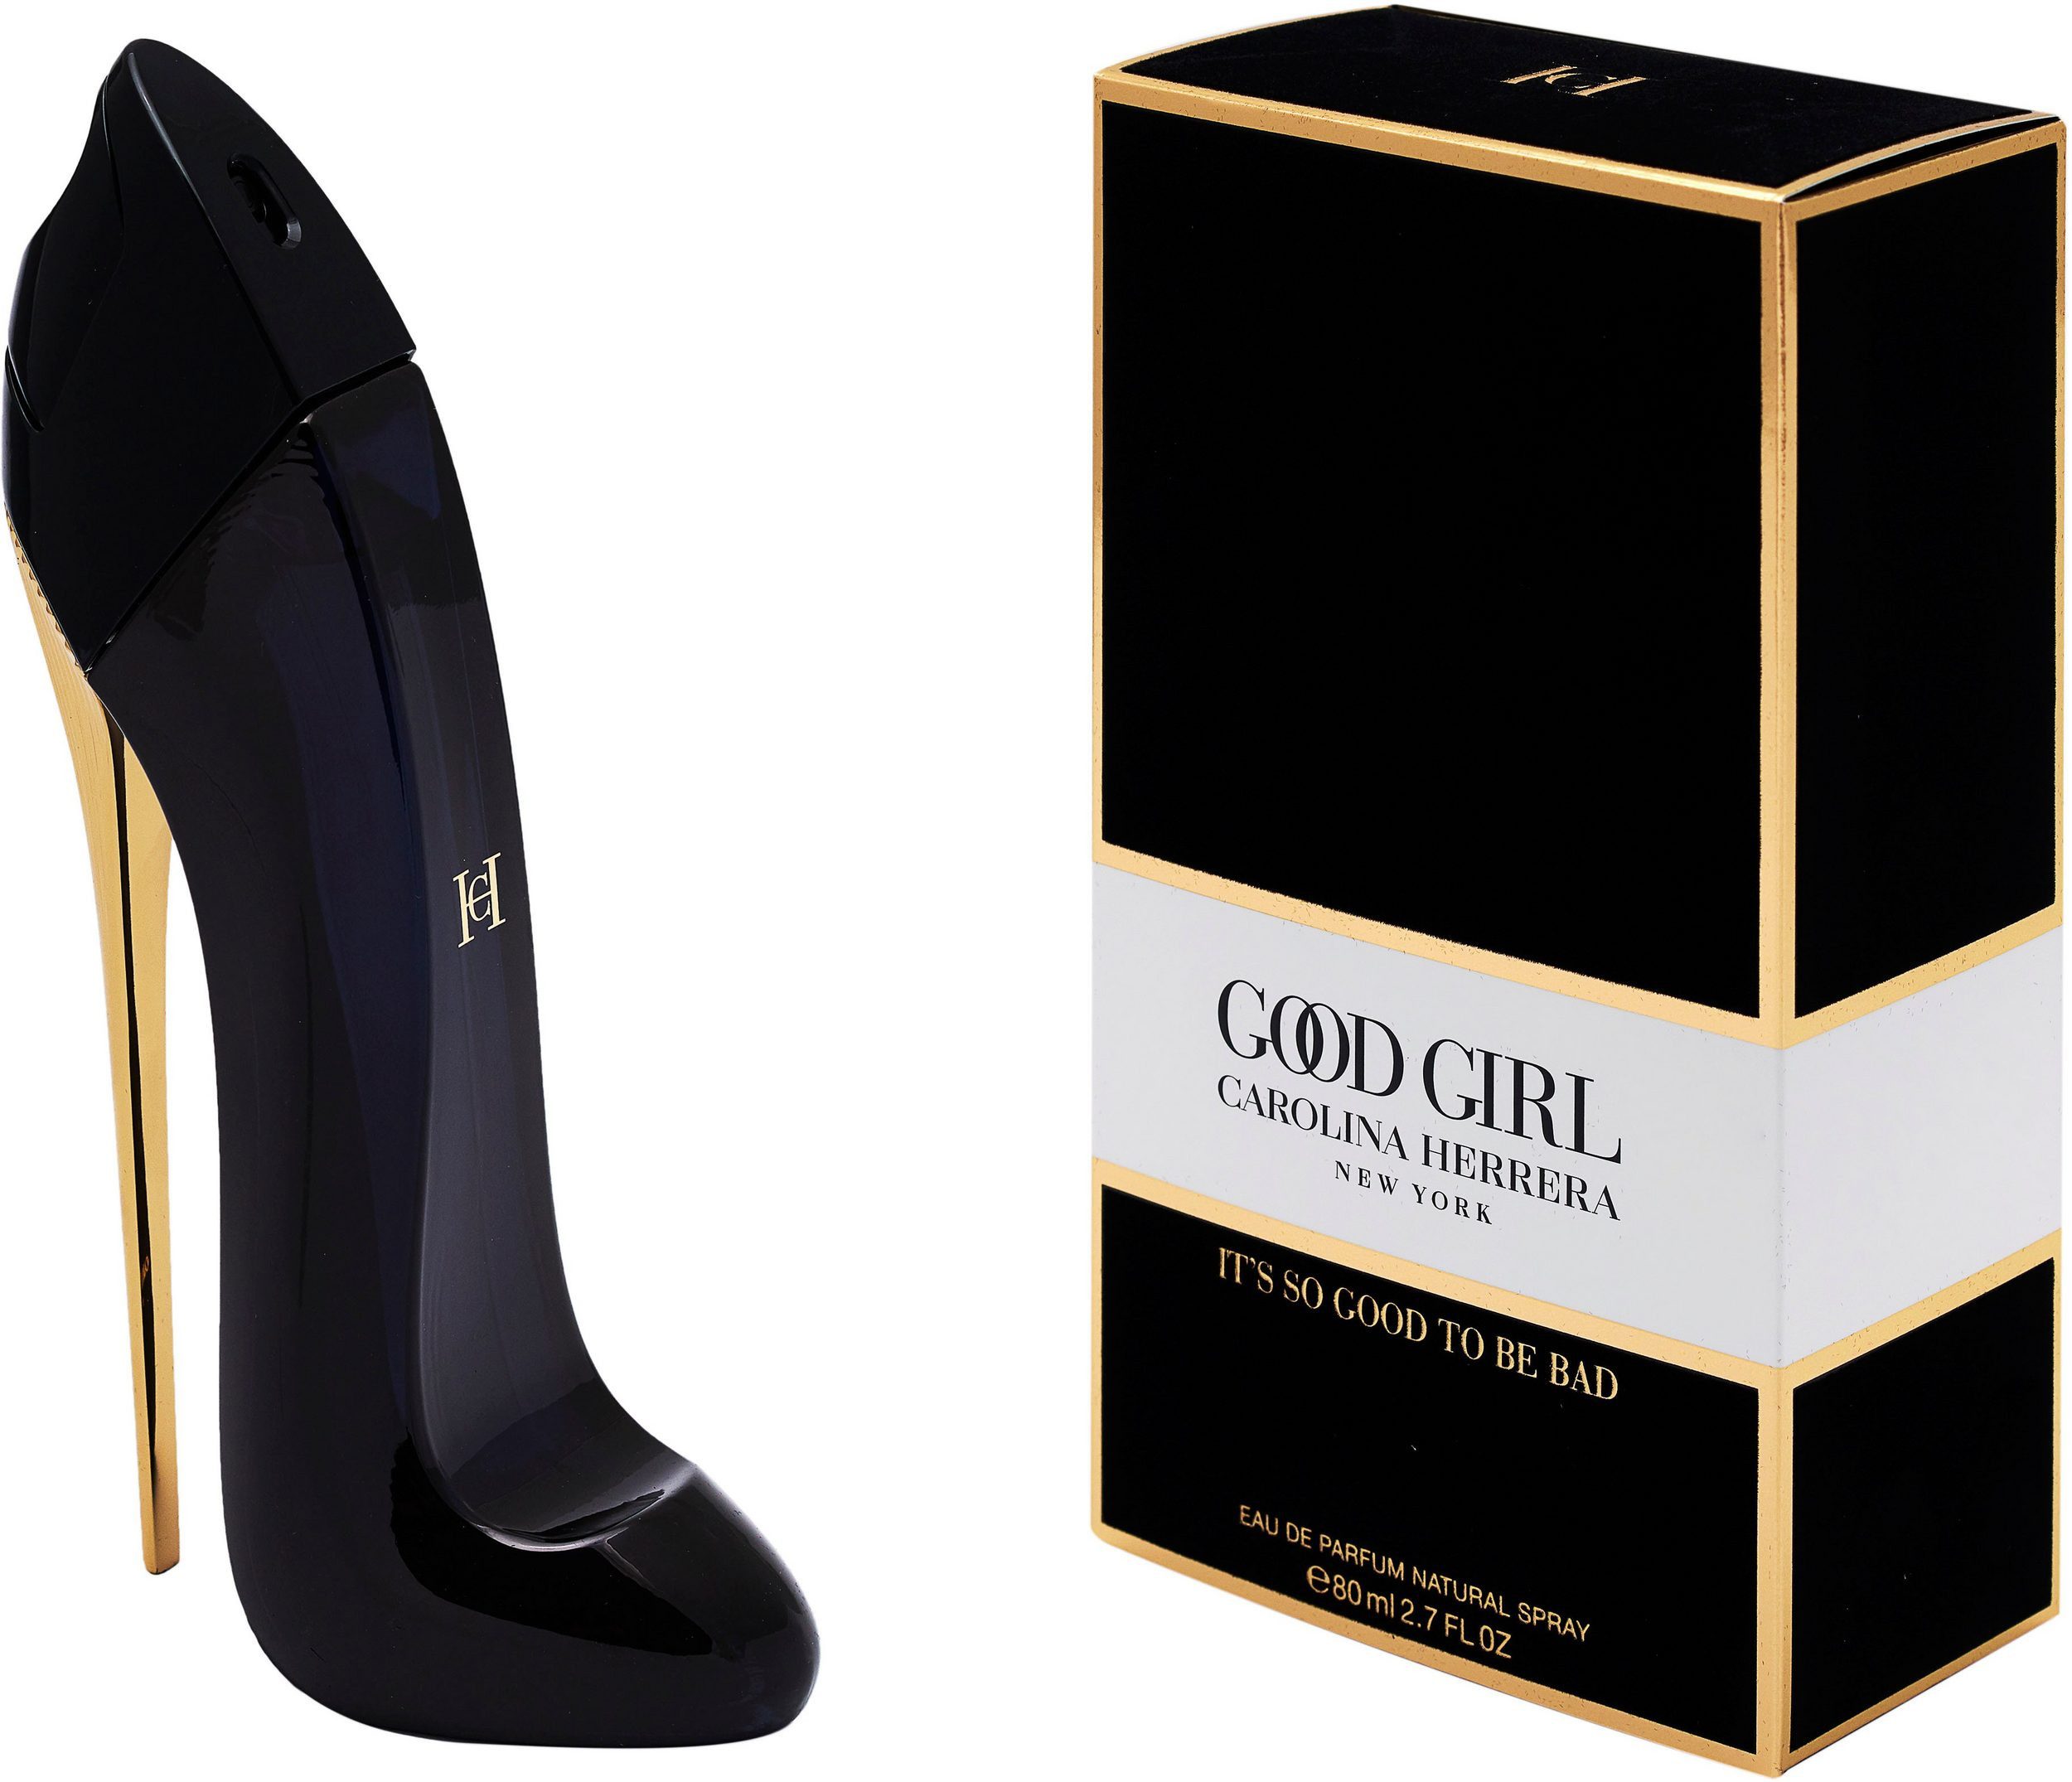 Carolina Herrera Eau de Parfum Carolina Herrera Eau de Parfum Carolina Herrera Good Girl, Flakon im High-Heels-Design